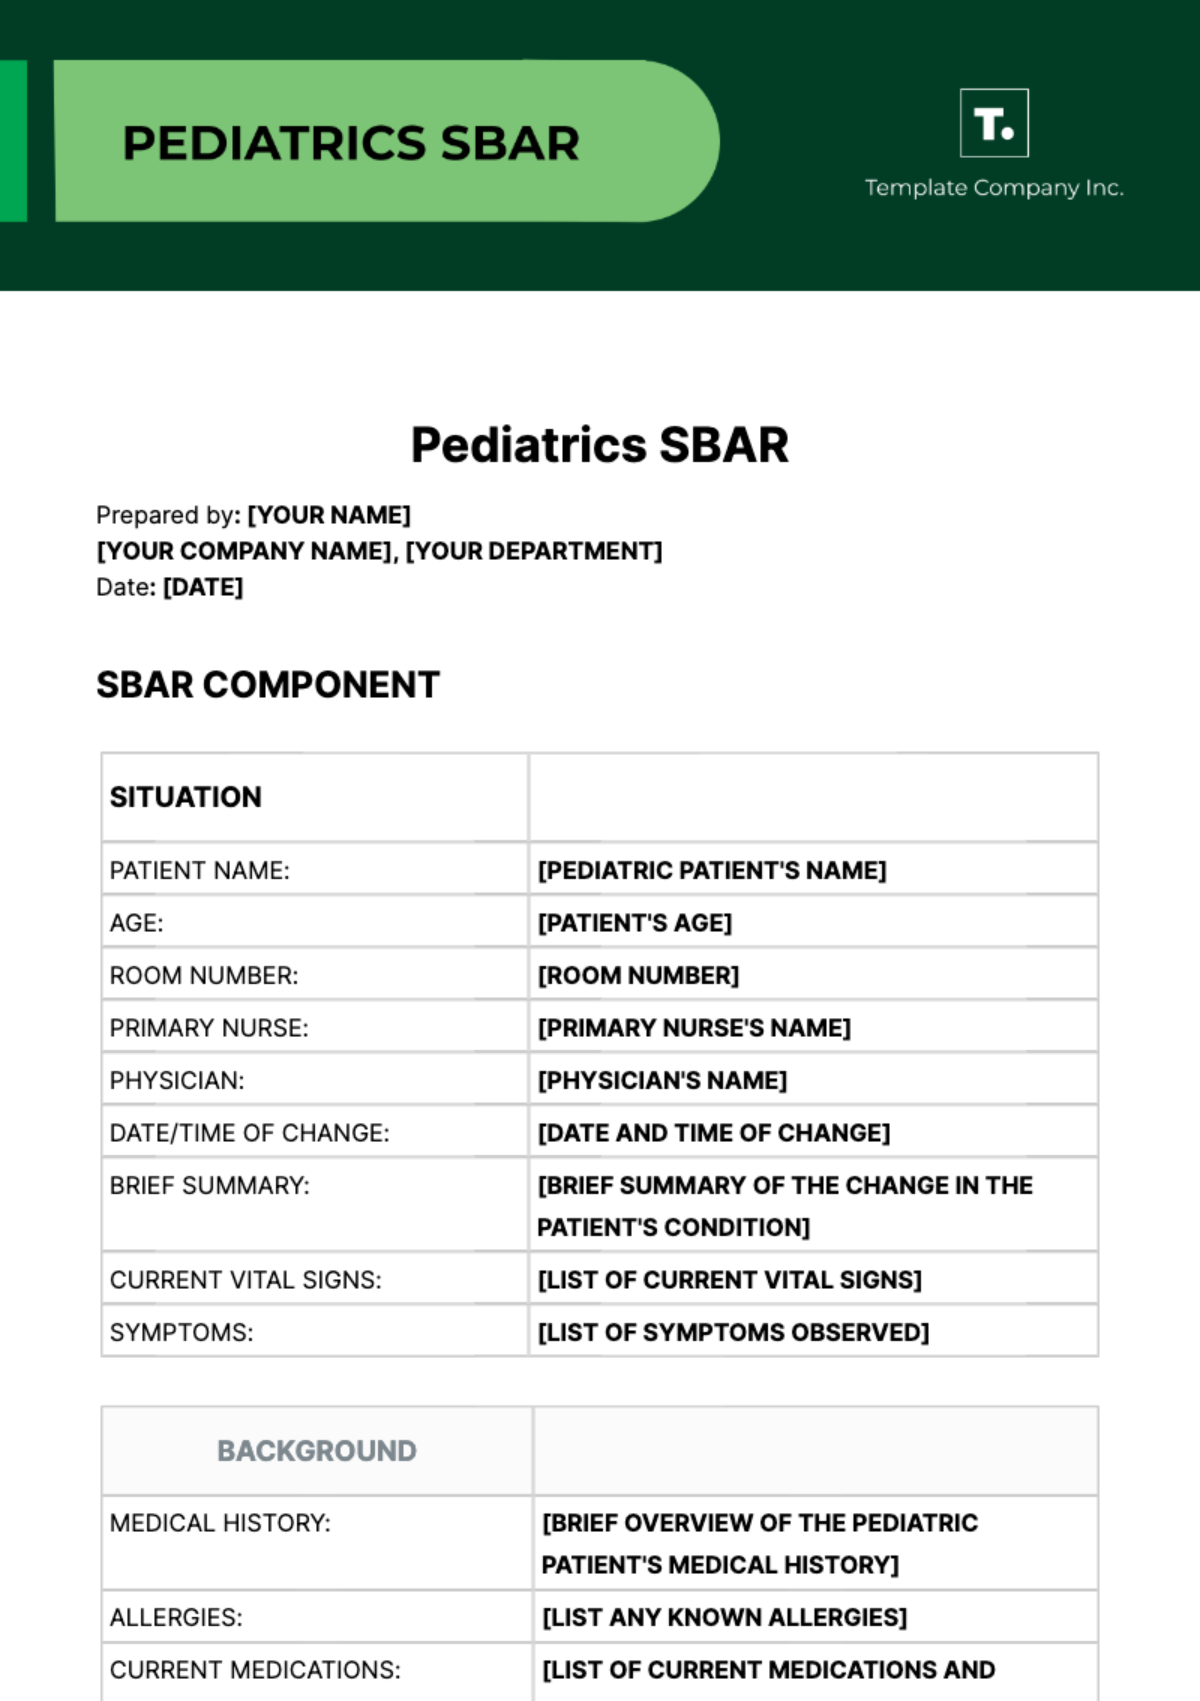 Free Pediatrics SBAR Template